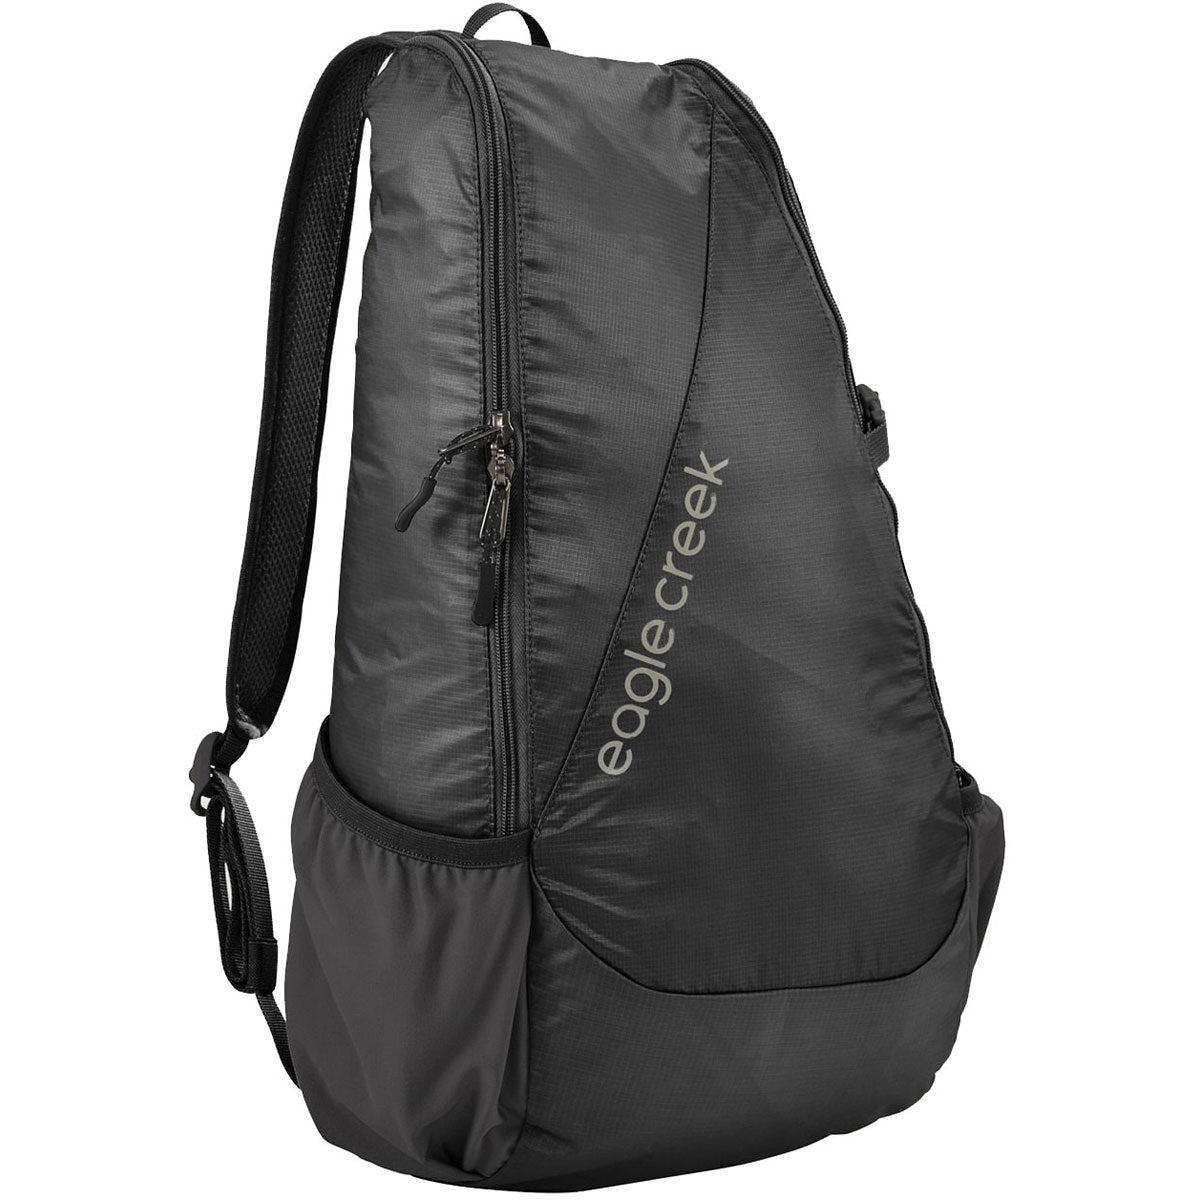 Hardcase/Carry on Trolley Luggage Backpack Conversion System Adjustable Strap Black